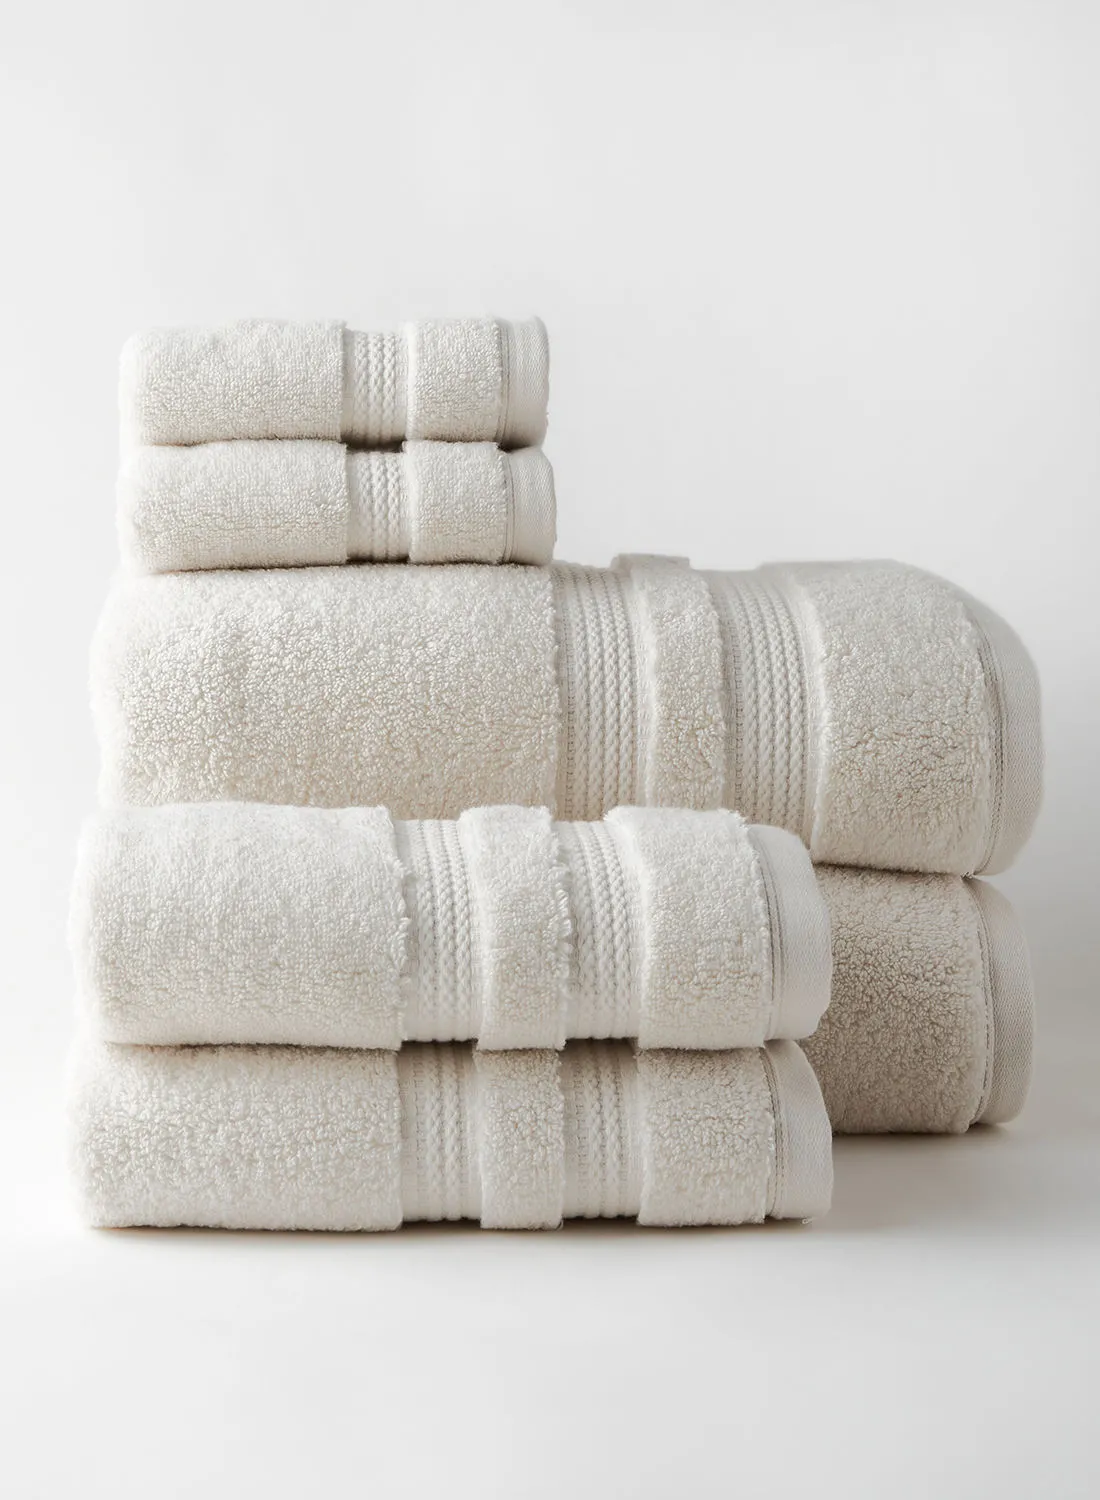 ebb & flow 6 Piece Bathroom Towel Set - 700 GSM - 2 Hand Towel - 2 Face Towel - 2 Bath Towel - Beige Color -Luxury Velvet Feel - Ultra Soft - Quick Dry